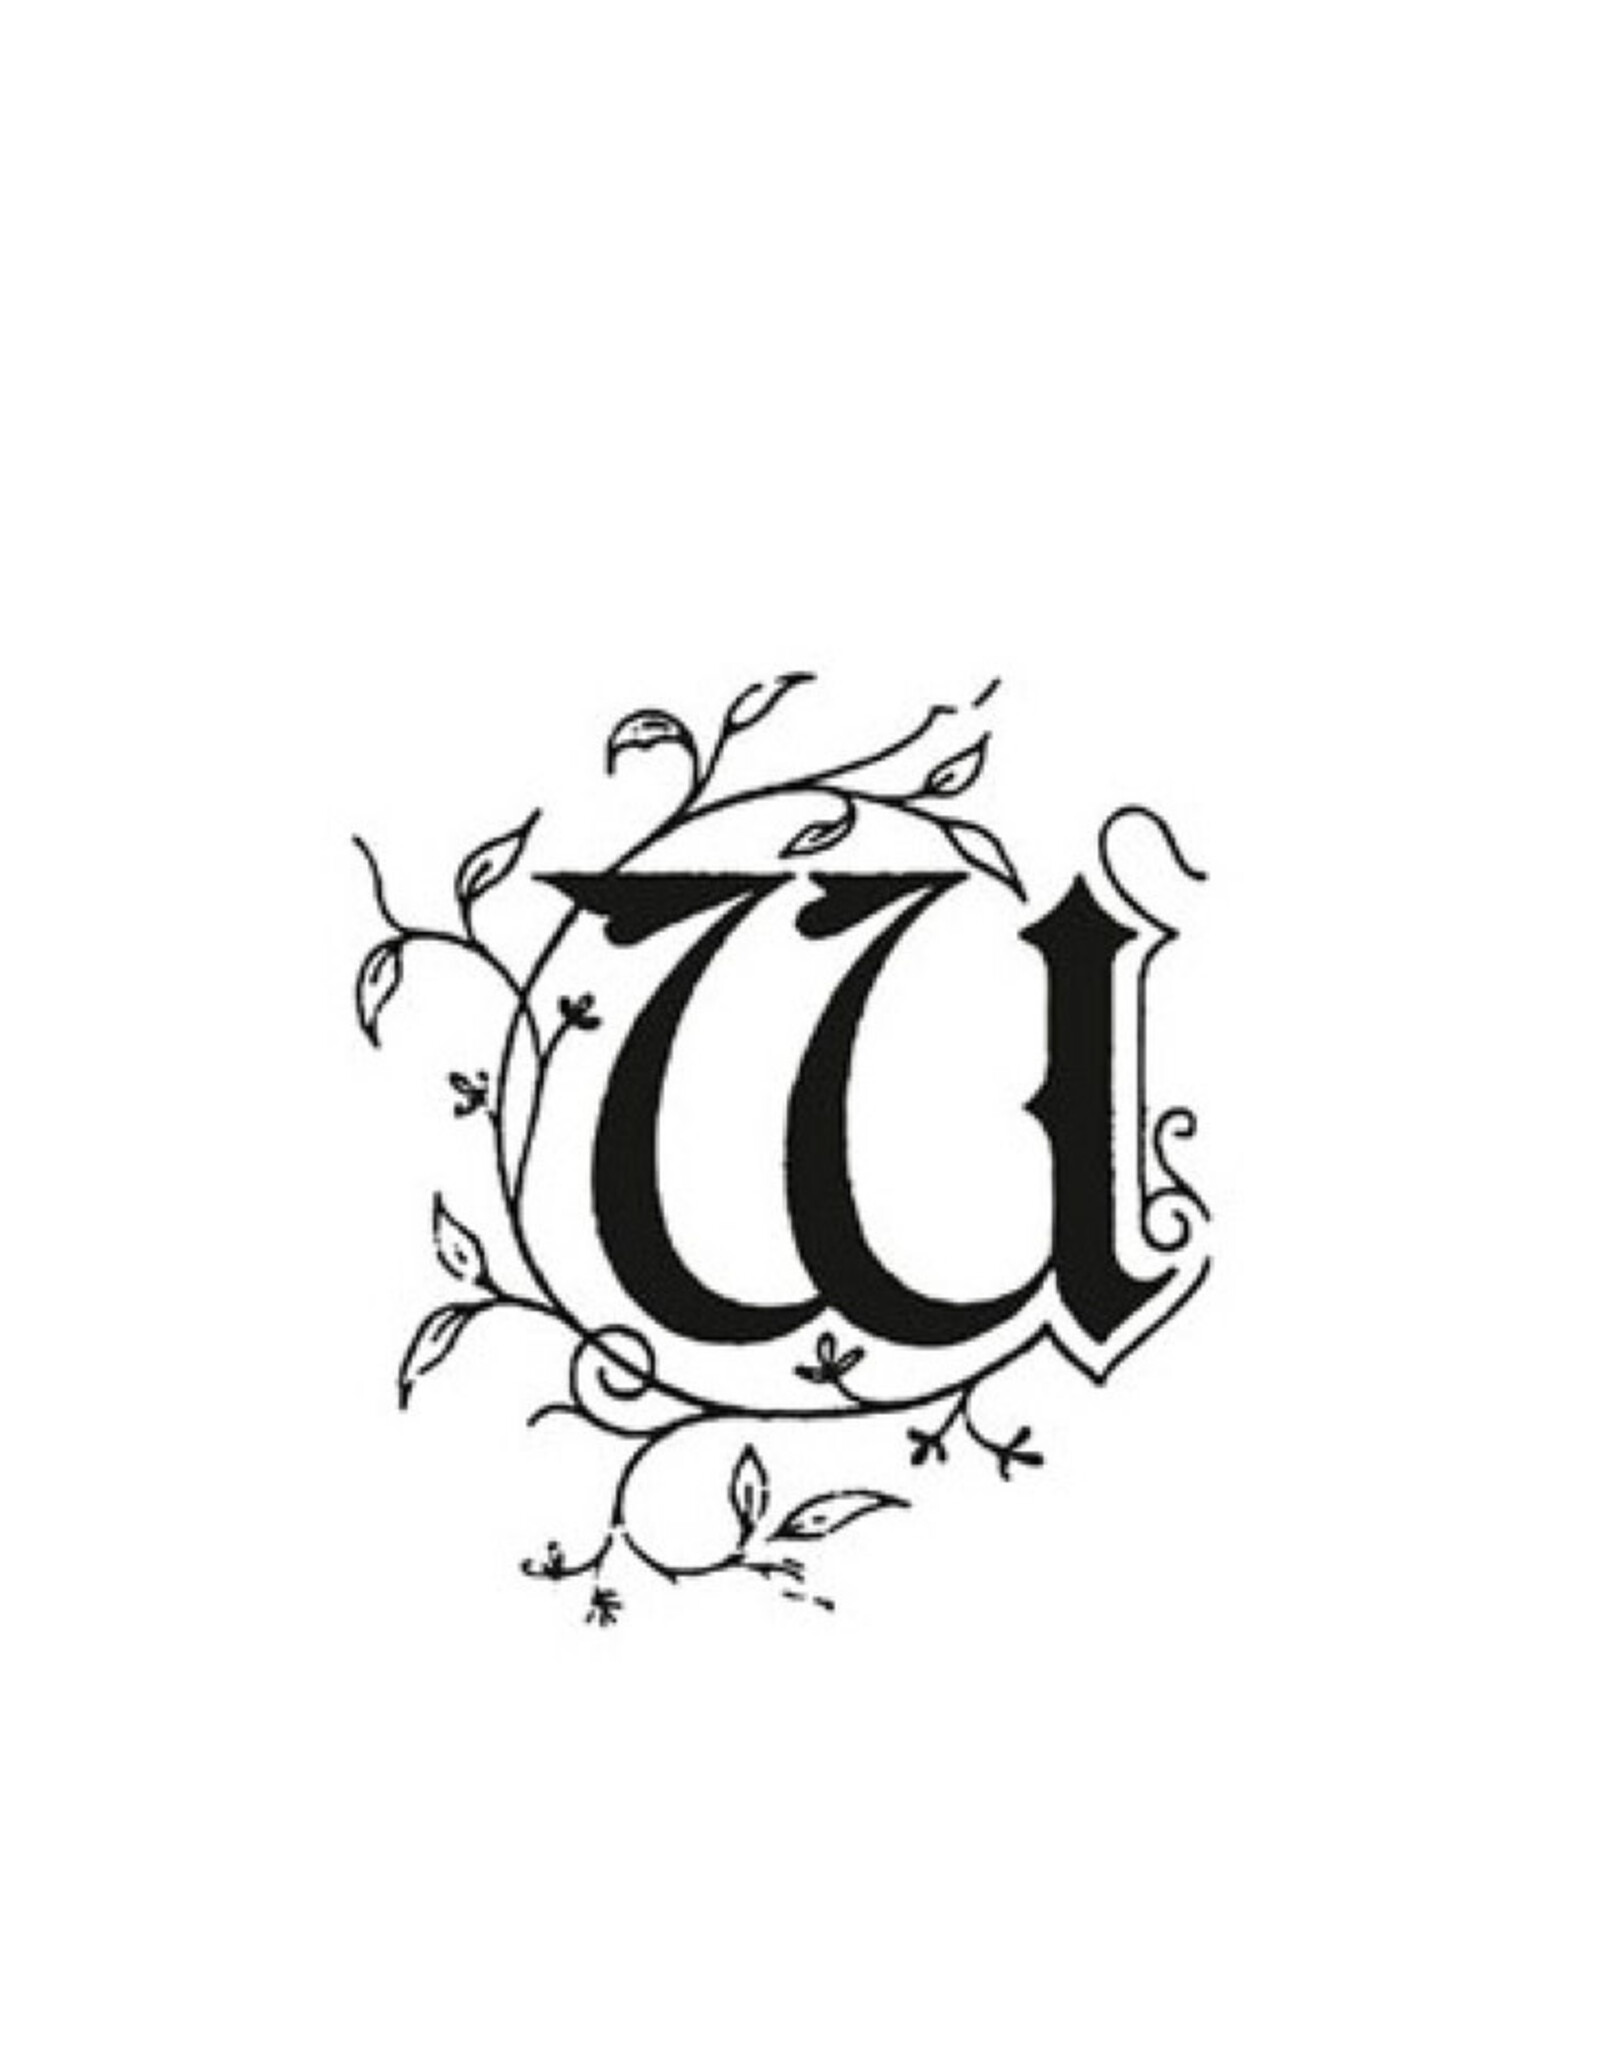 J. Herbin "W" Illuminated Letter Seal + Handle